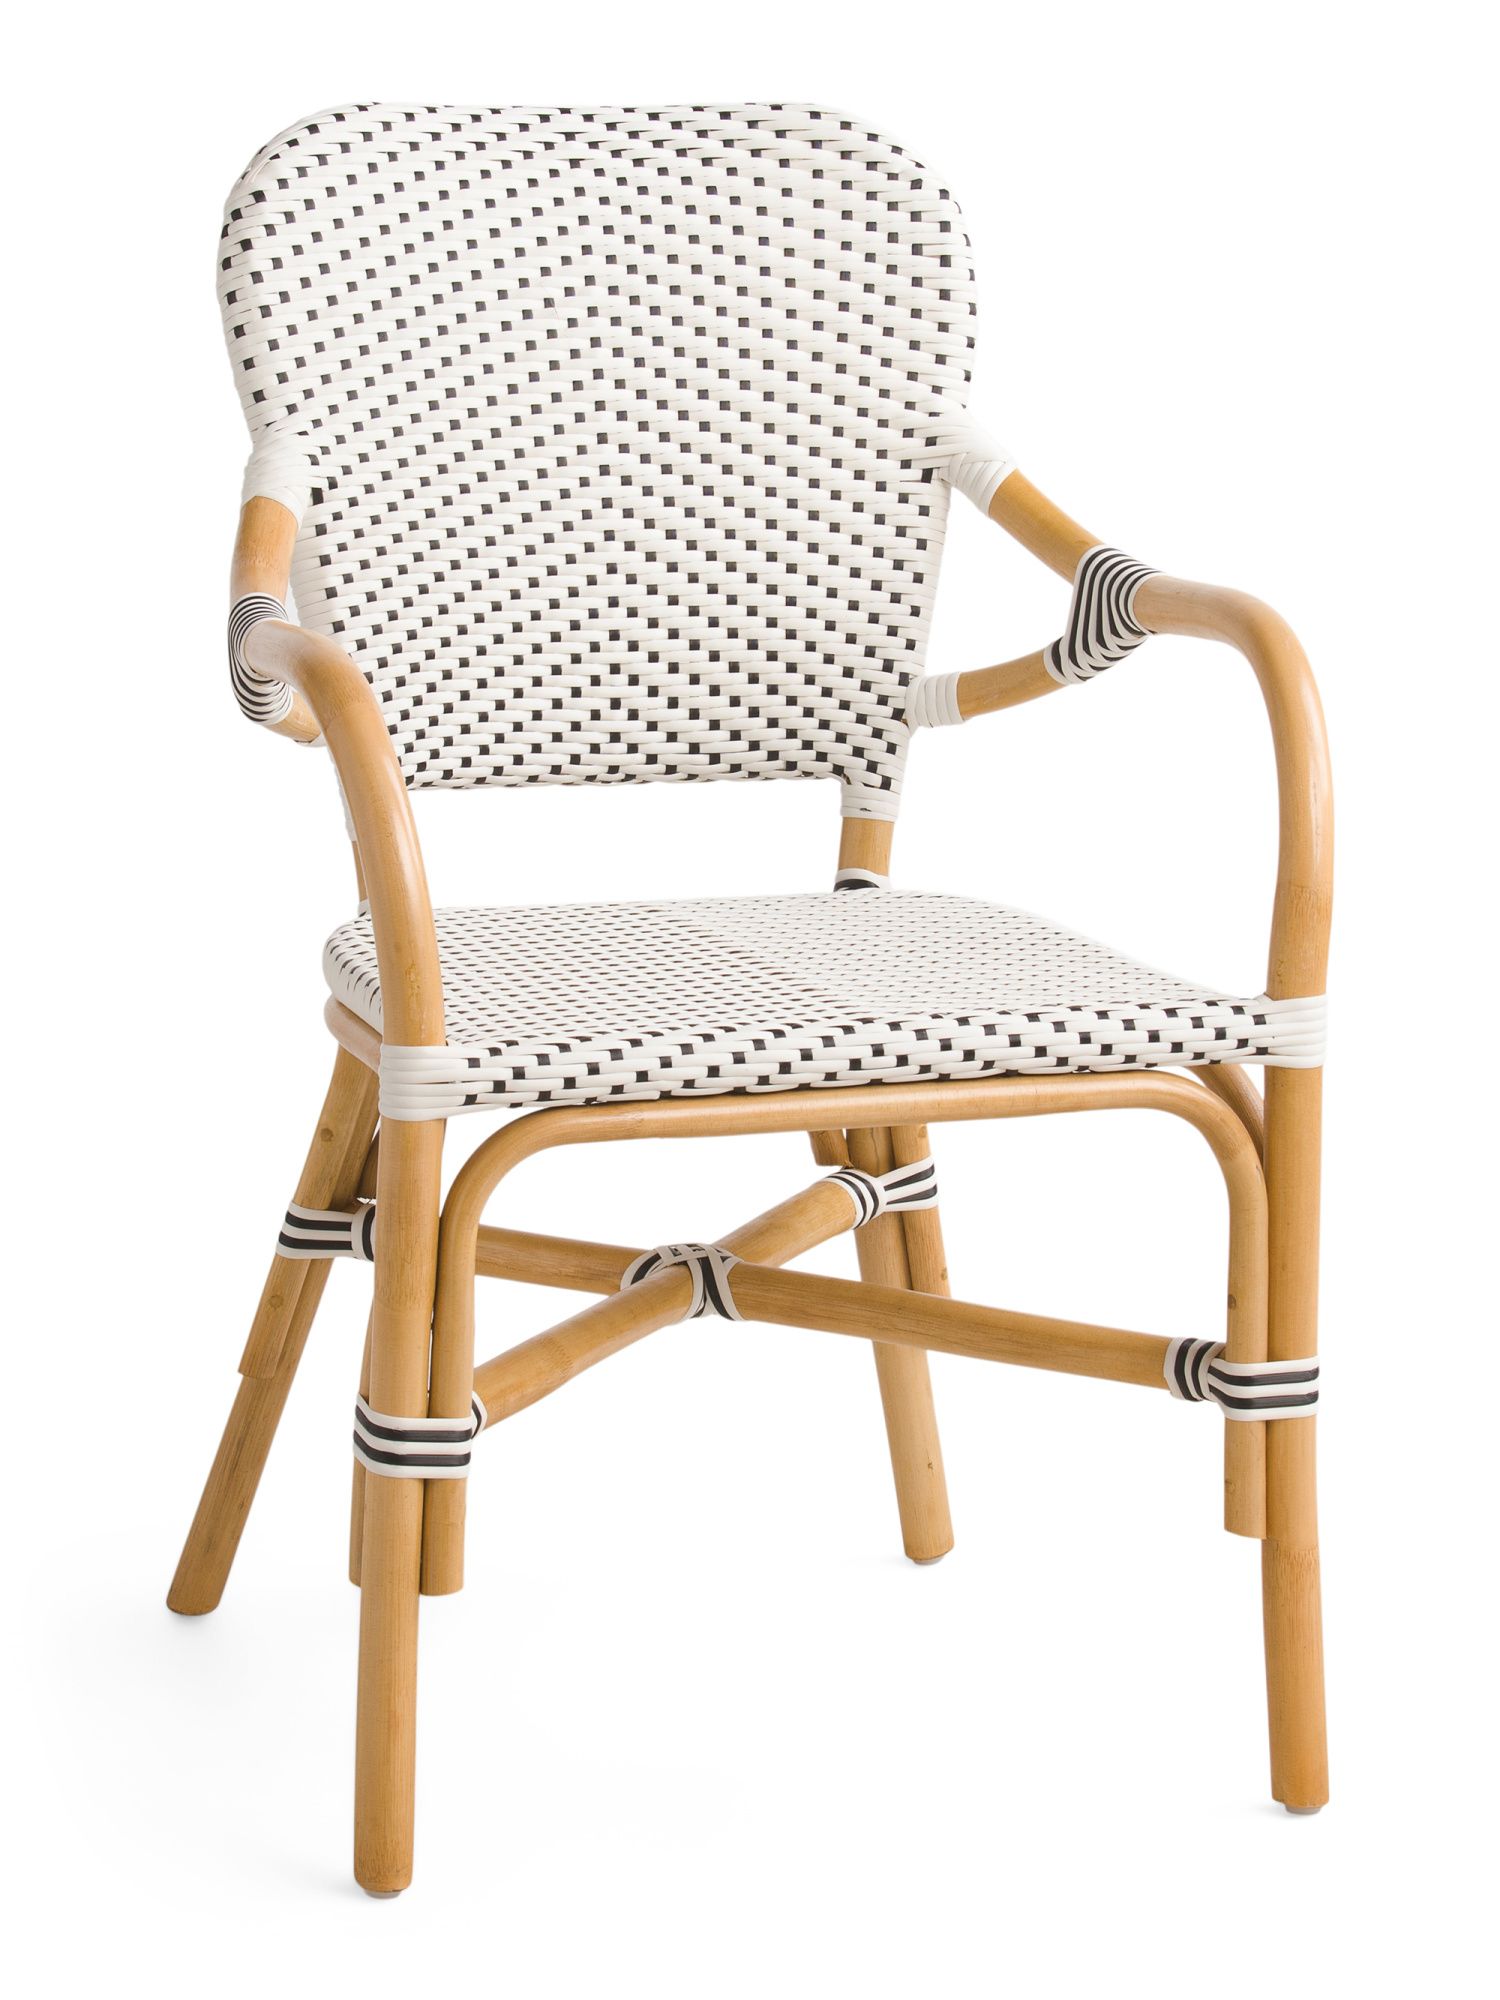 Outdoor Bistro Chair | TJ Maxx